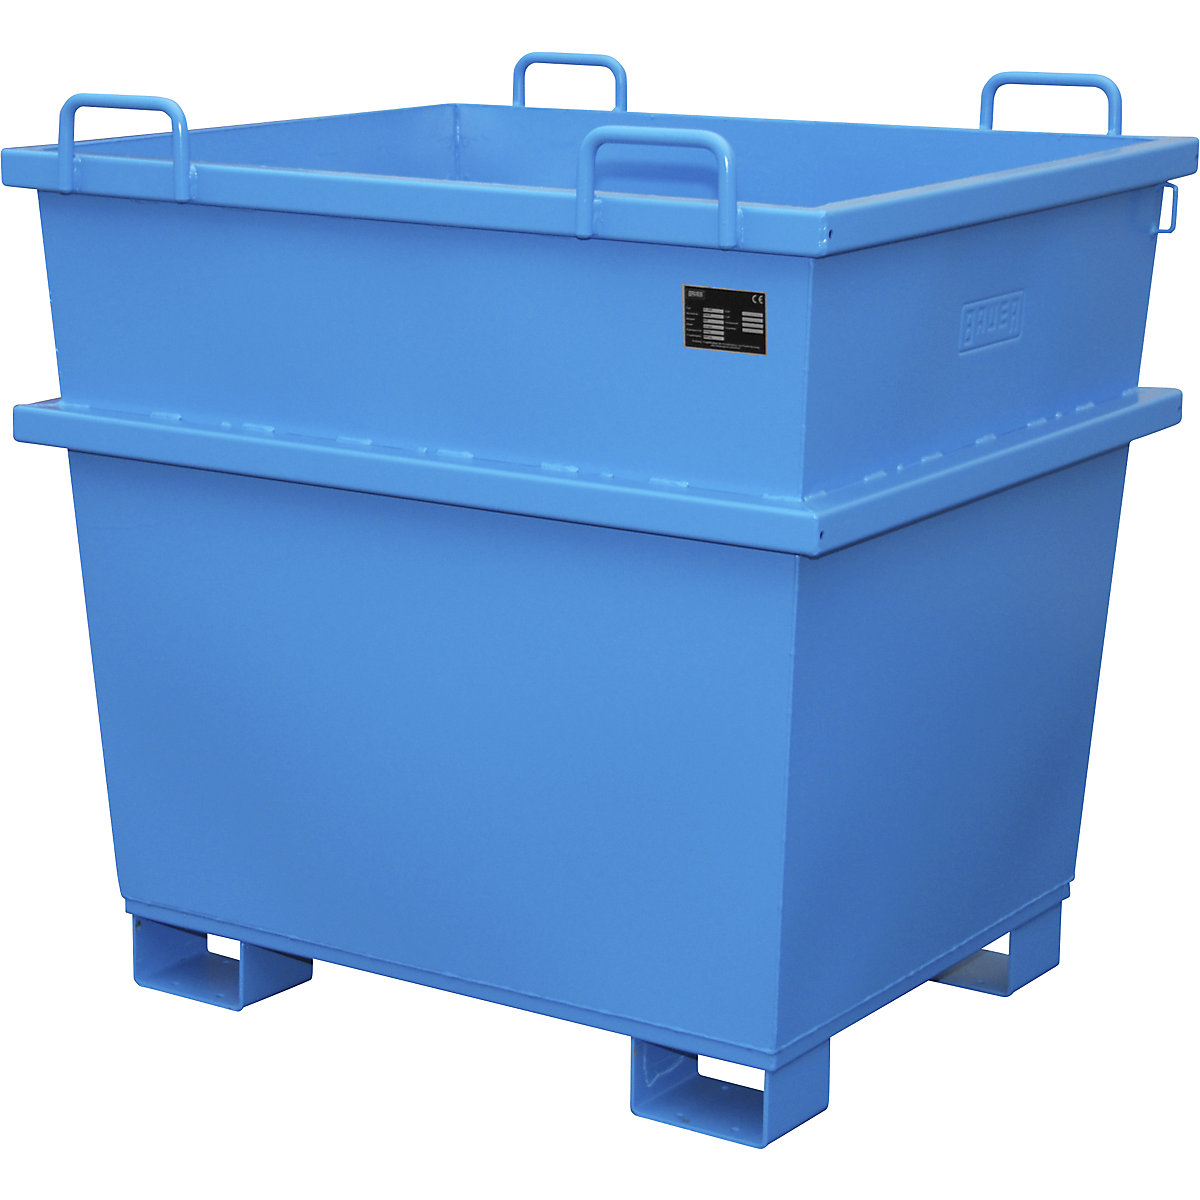 Container universal – eurokraft pro, volum 1 m³, albastru deschis, minimum 2 buc.